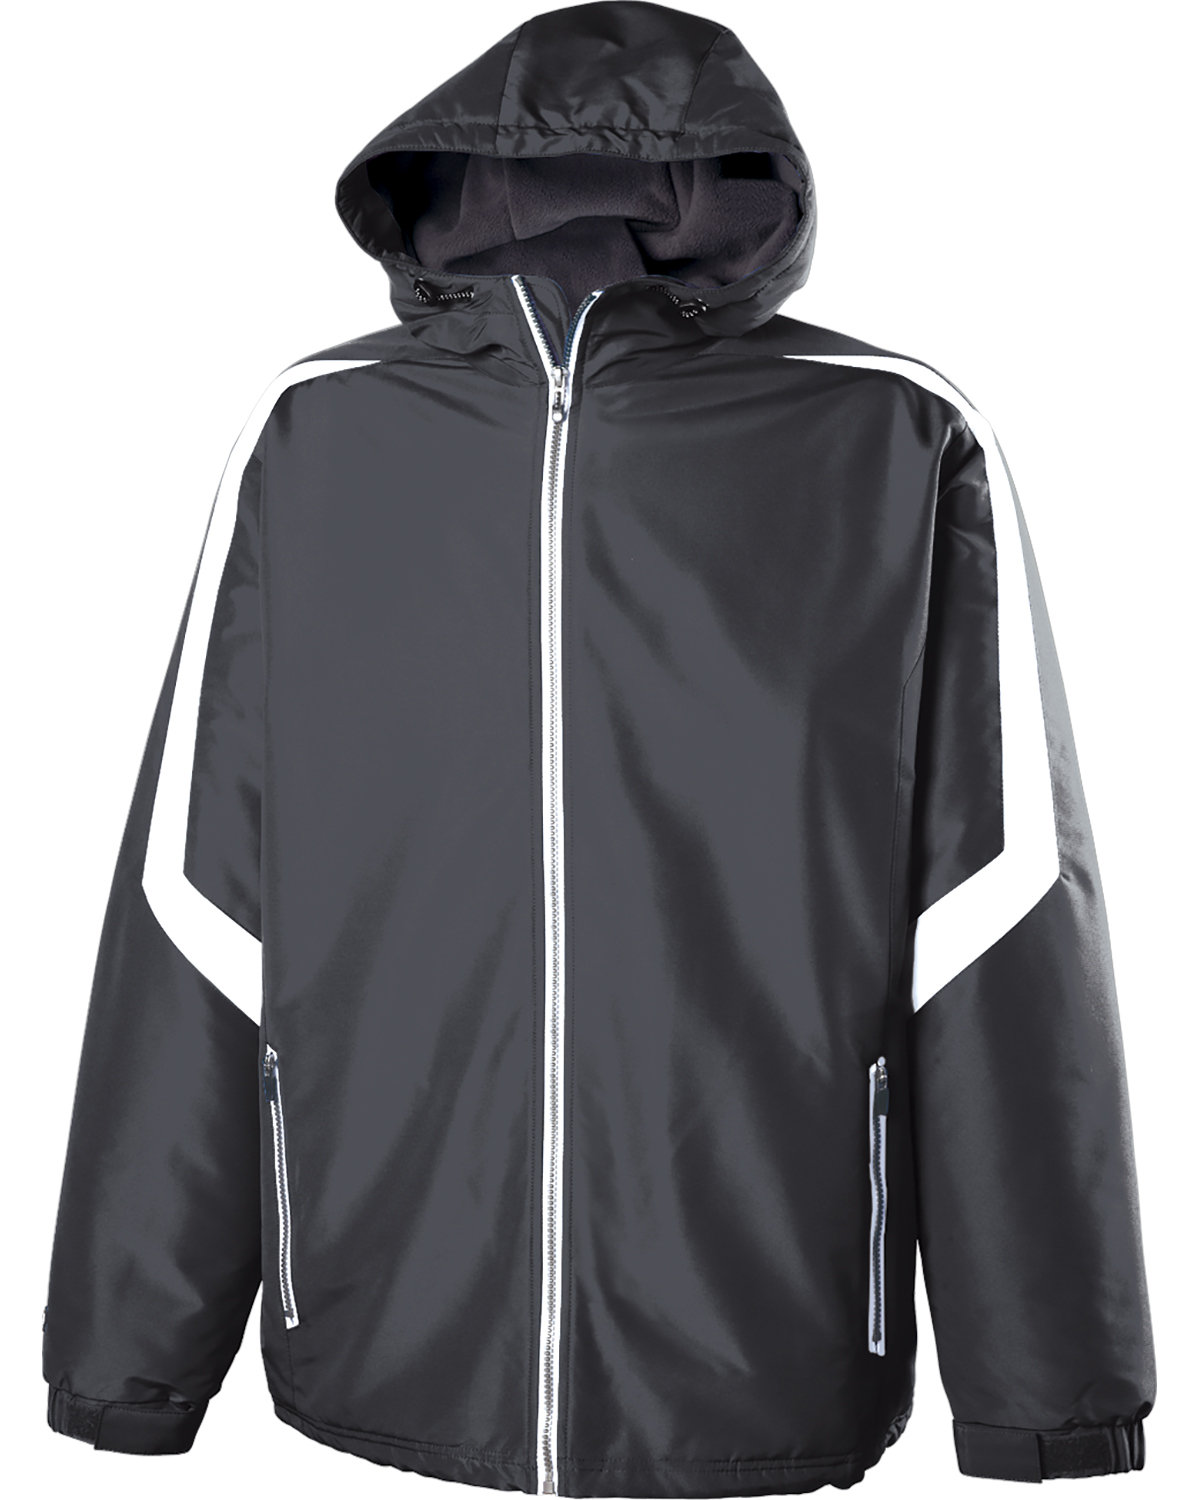 Smitty Black & White Collegiate Style Front Zip Polyester Shell Jacket BKS-227 Basketball 